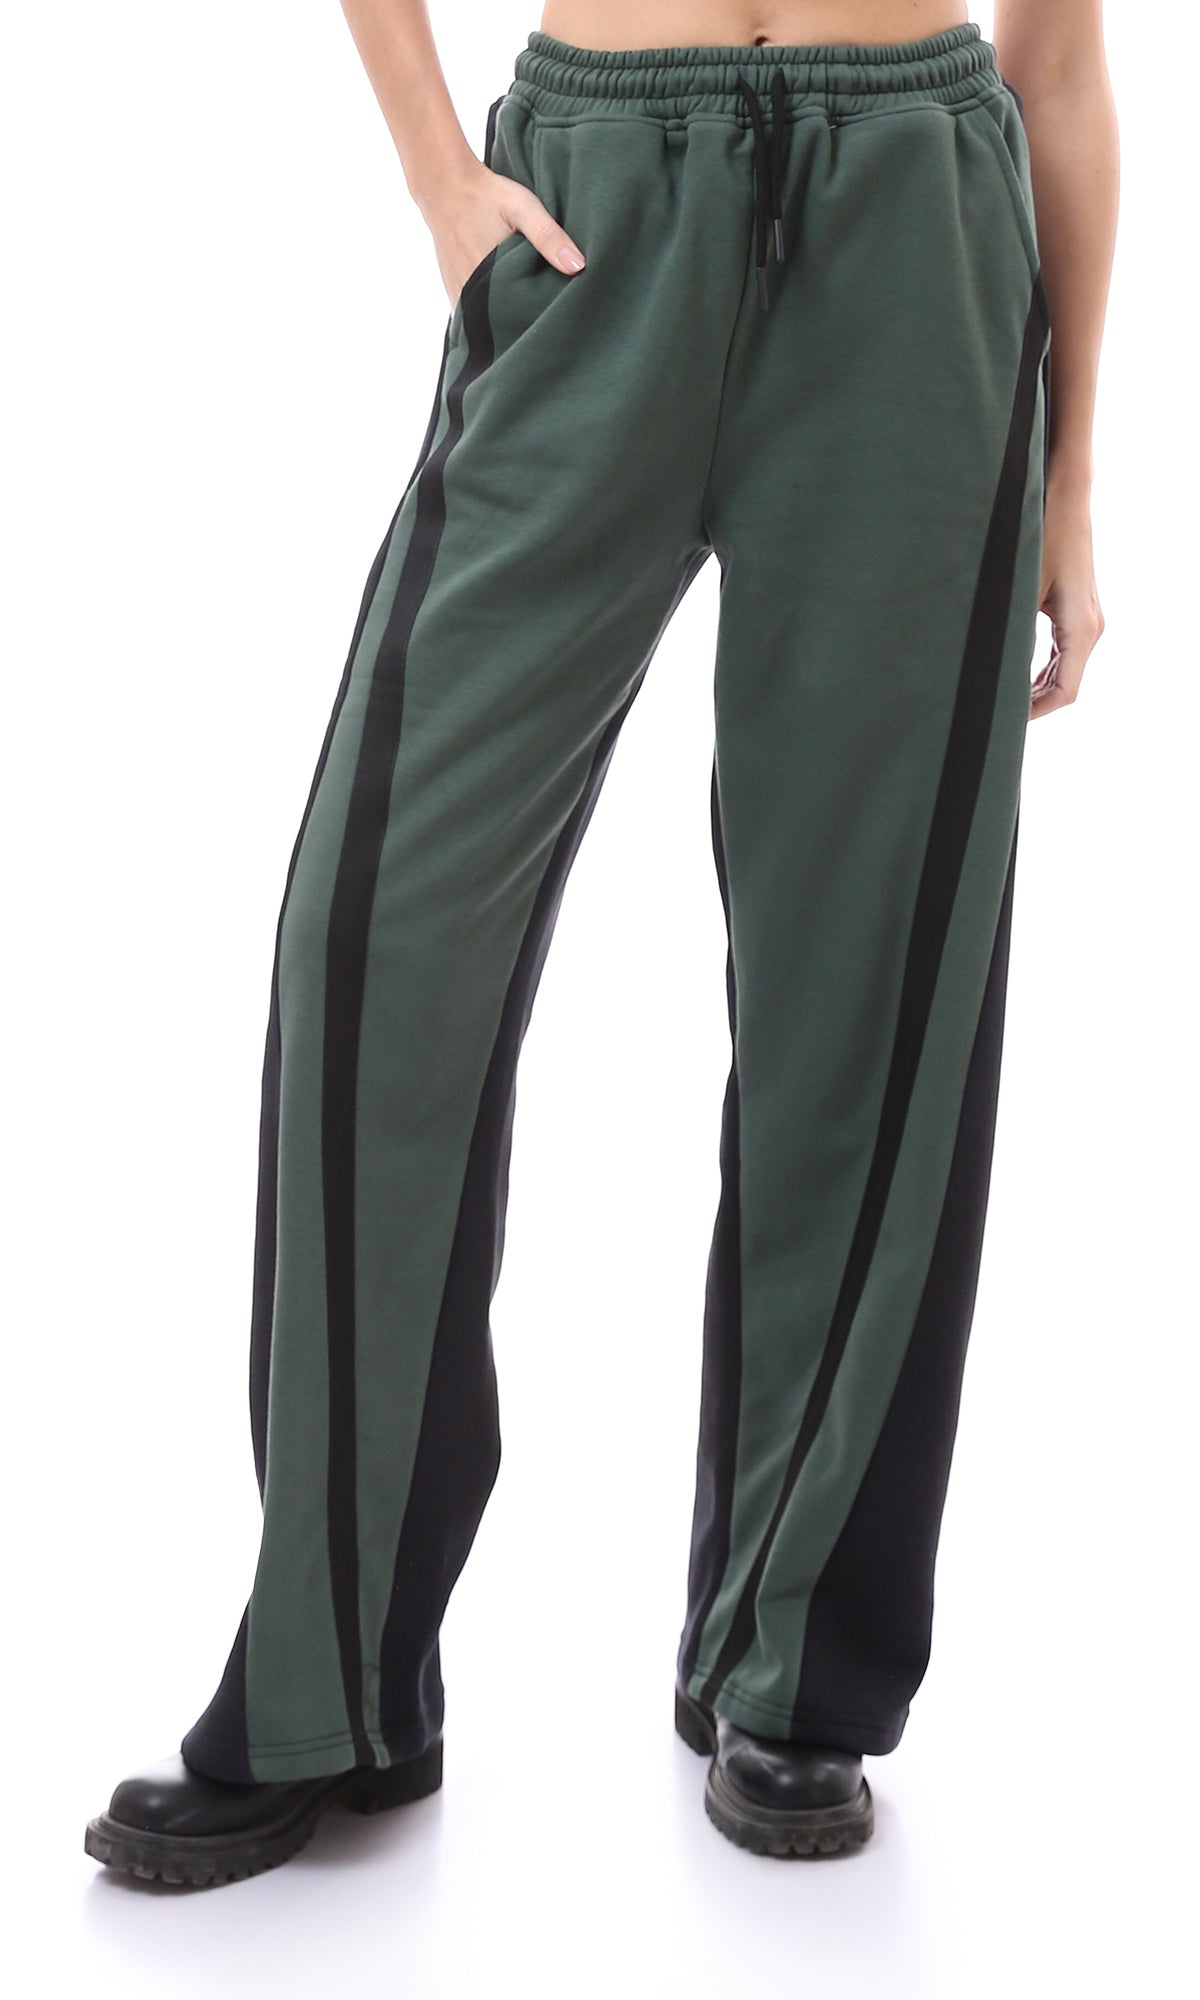 O175760 Bi-Tone Wide Leg Dark Green & Black Pants